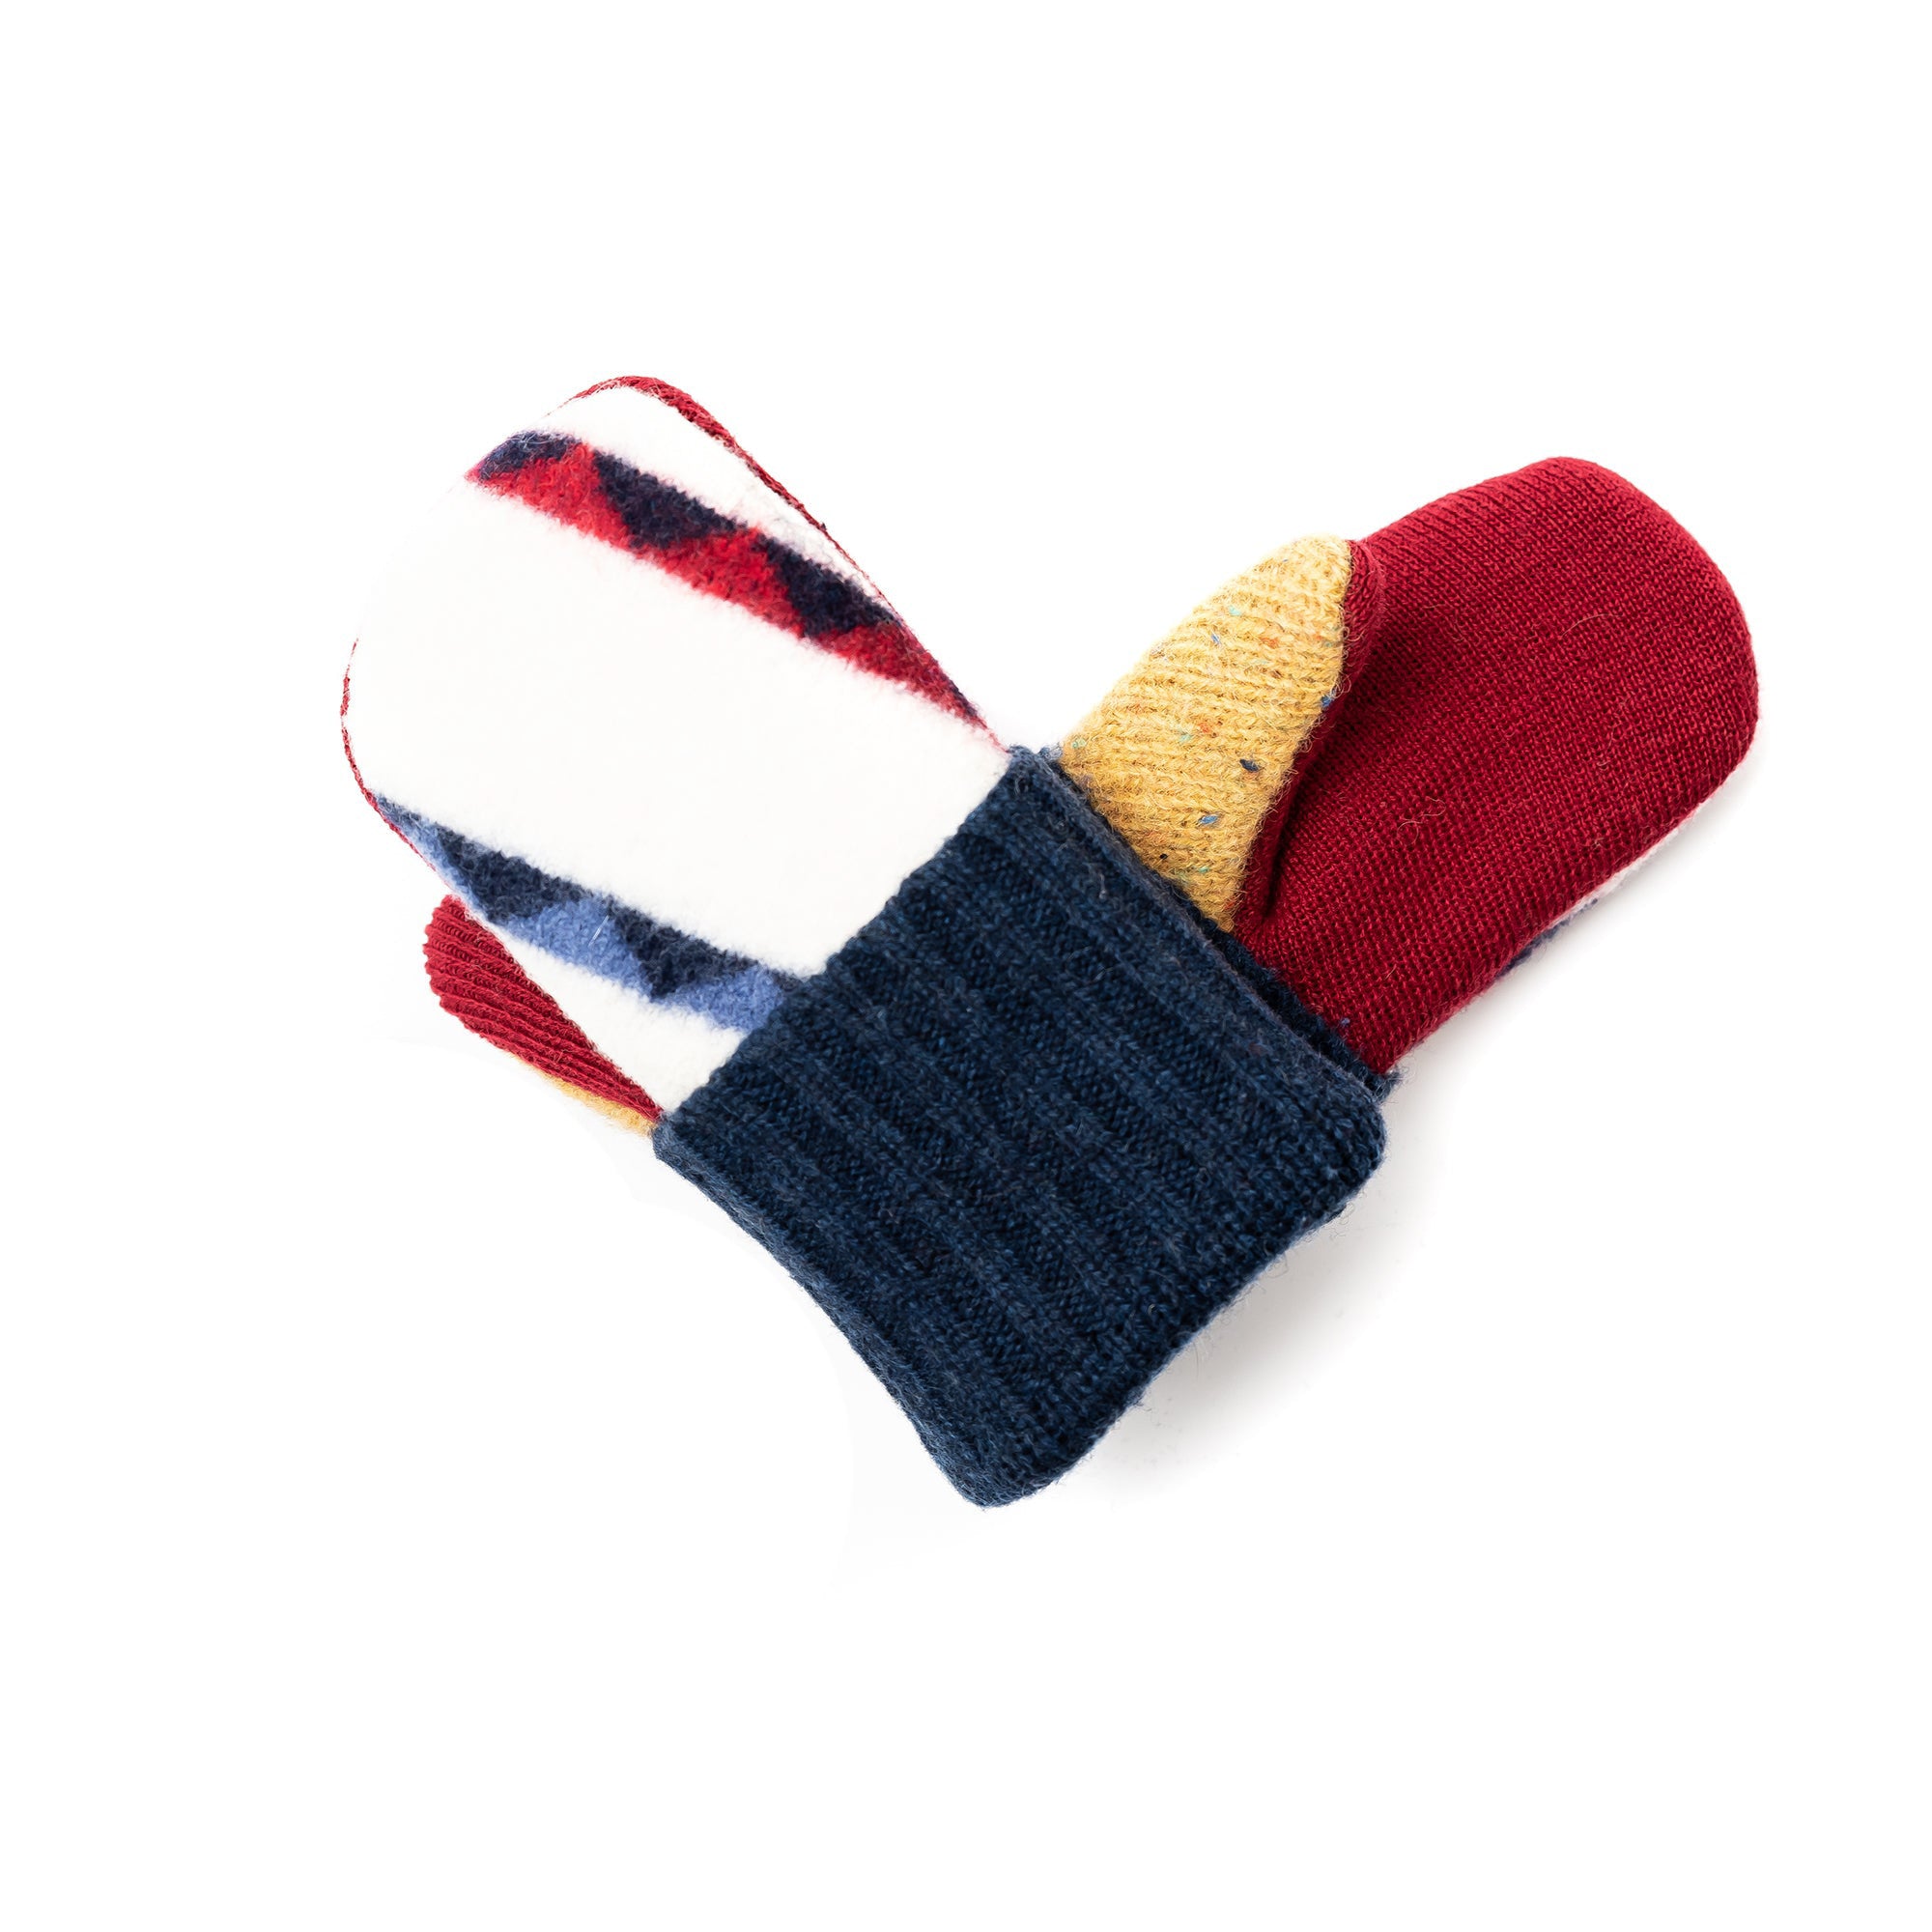 Small Kid's Wool Sweater Mittens | Lovin' Every Minute